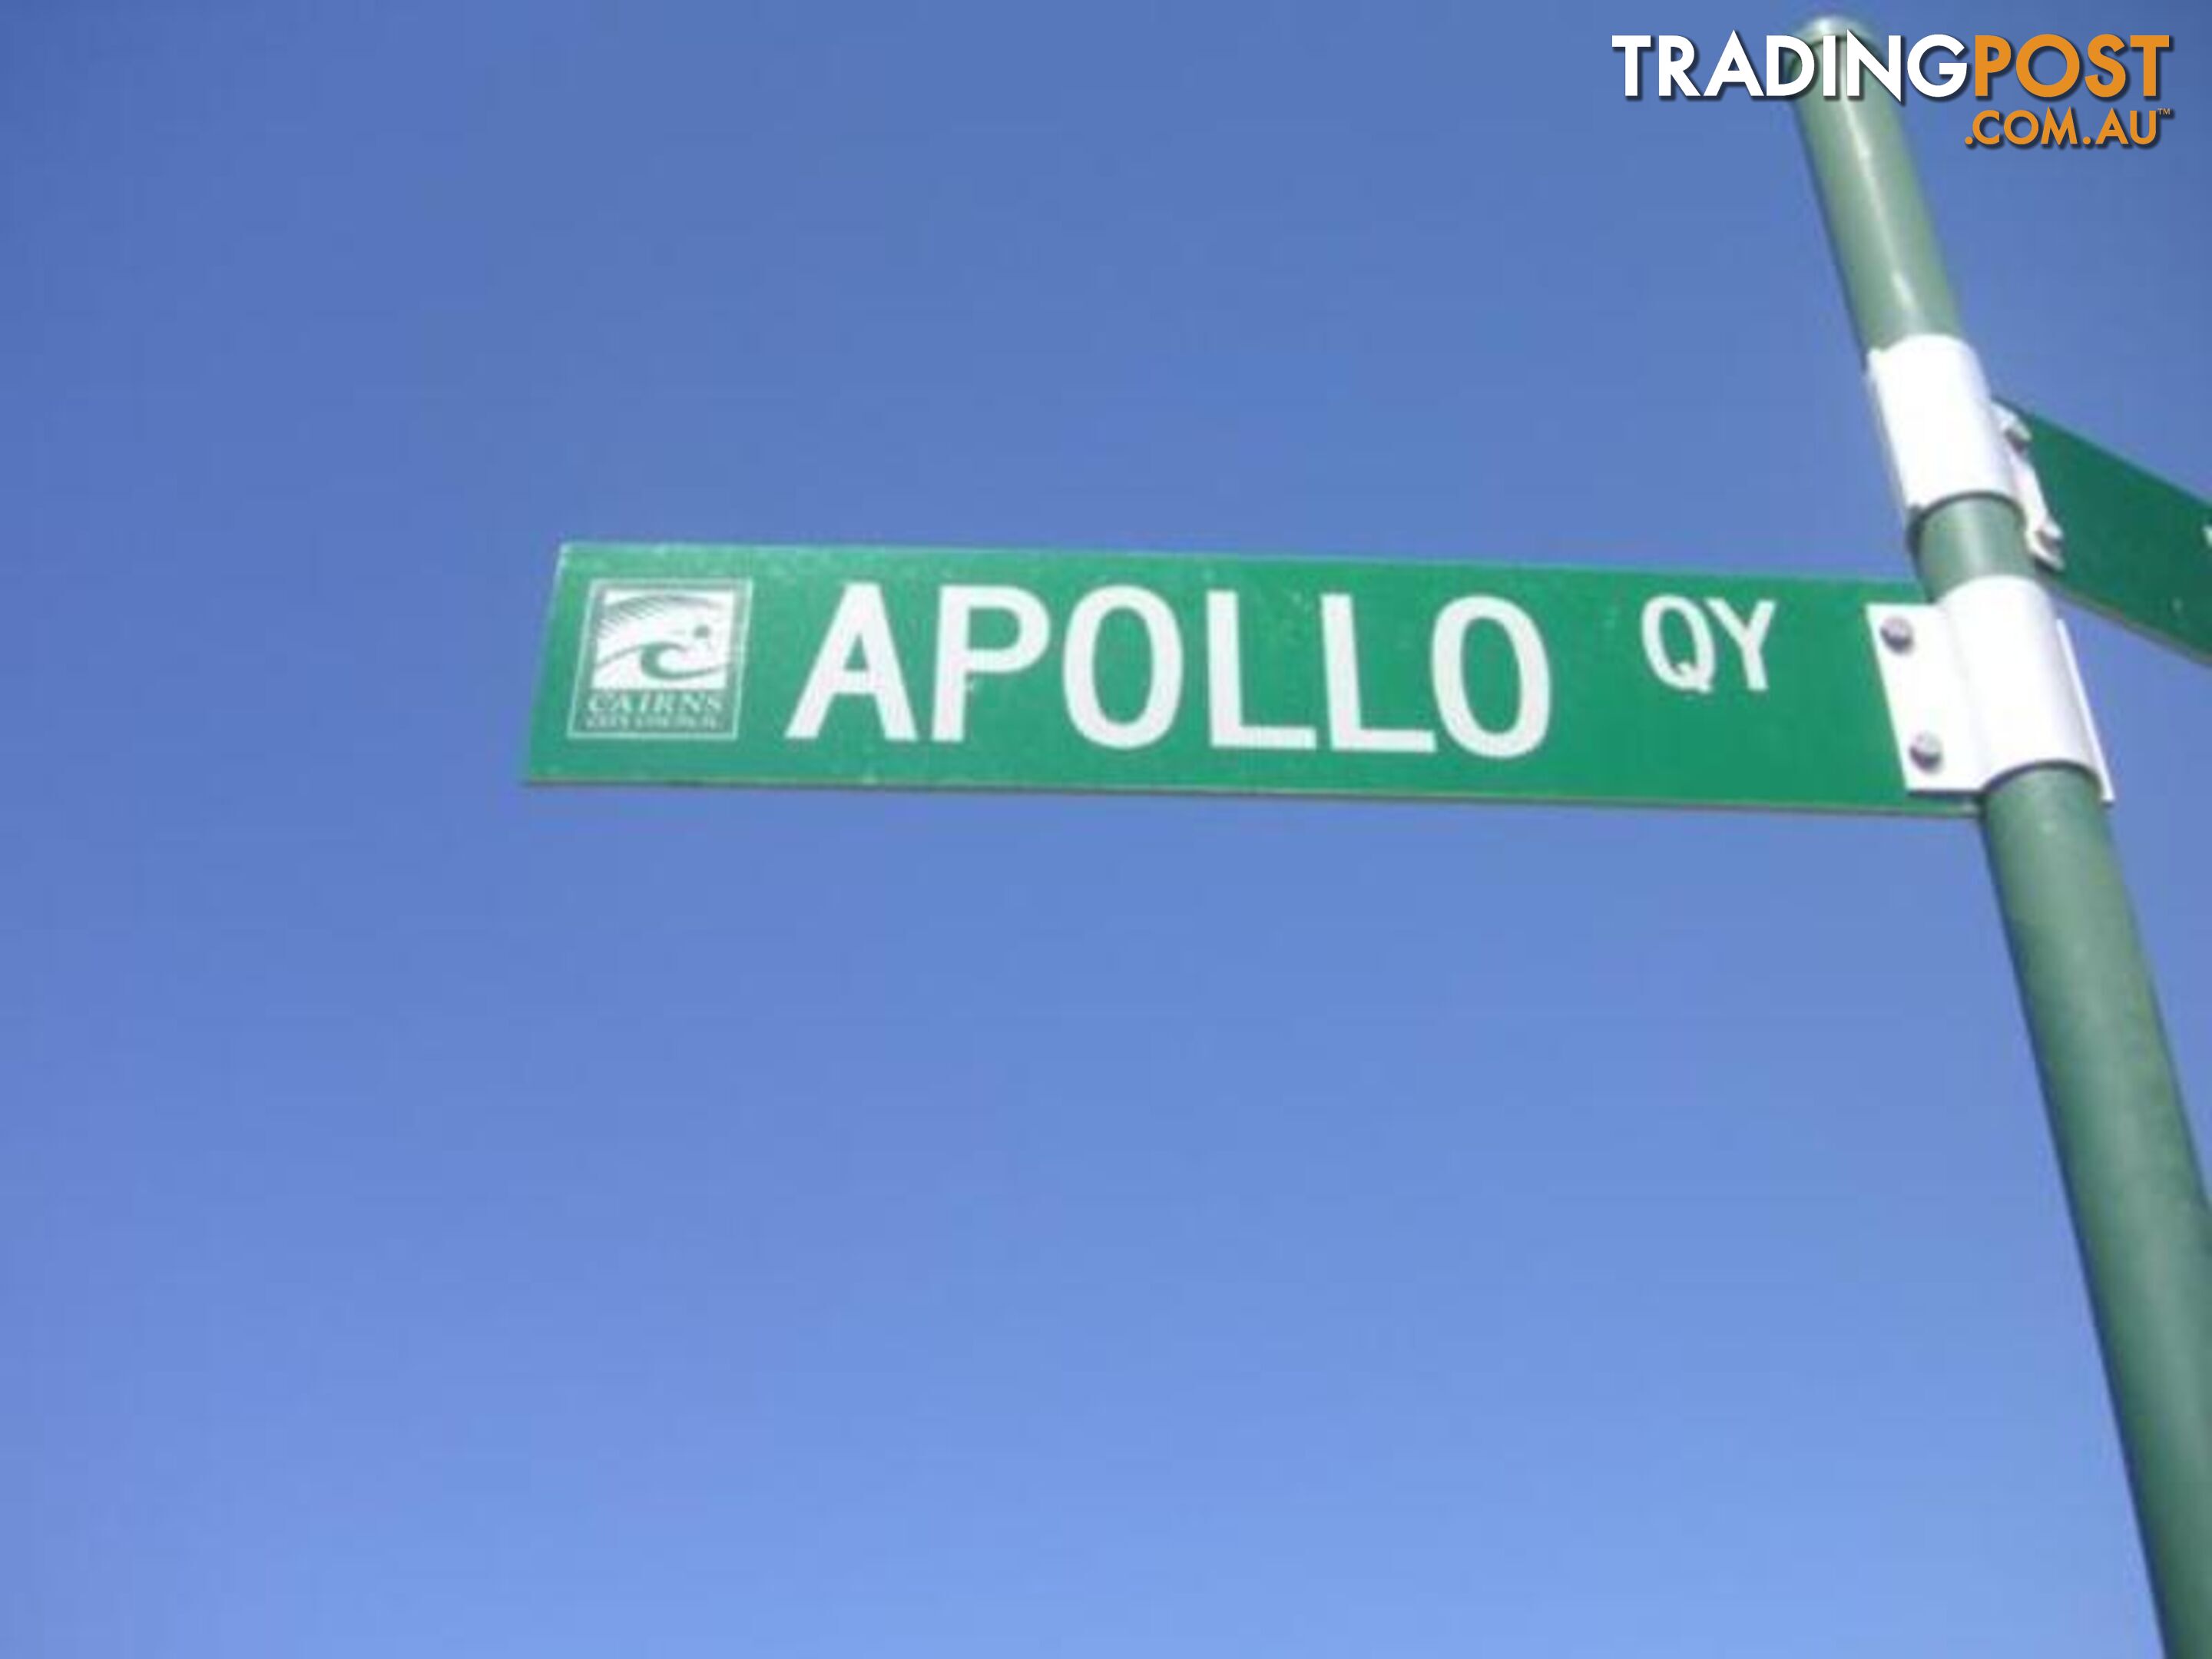 Lot 90 6 Apollo QY TRINITY PARK QLD 4879